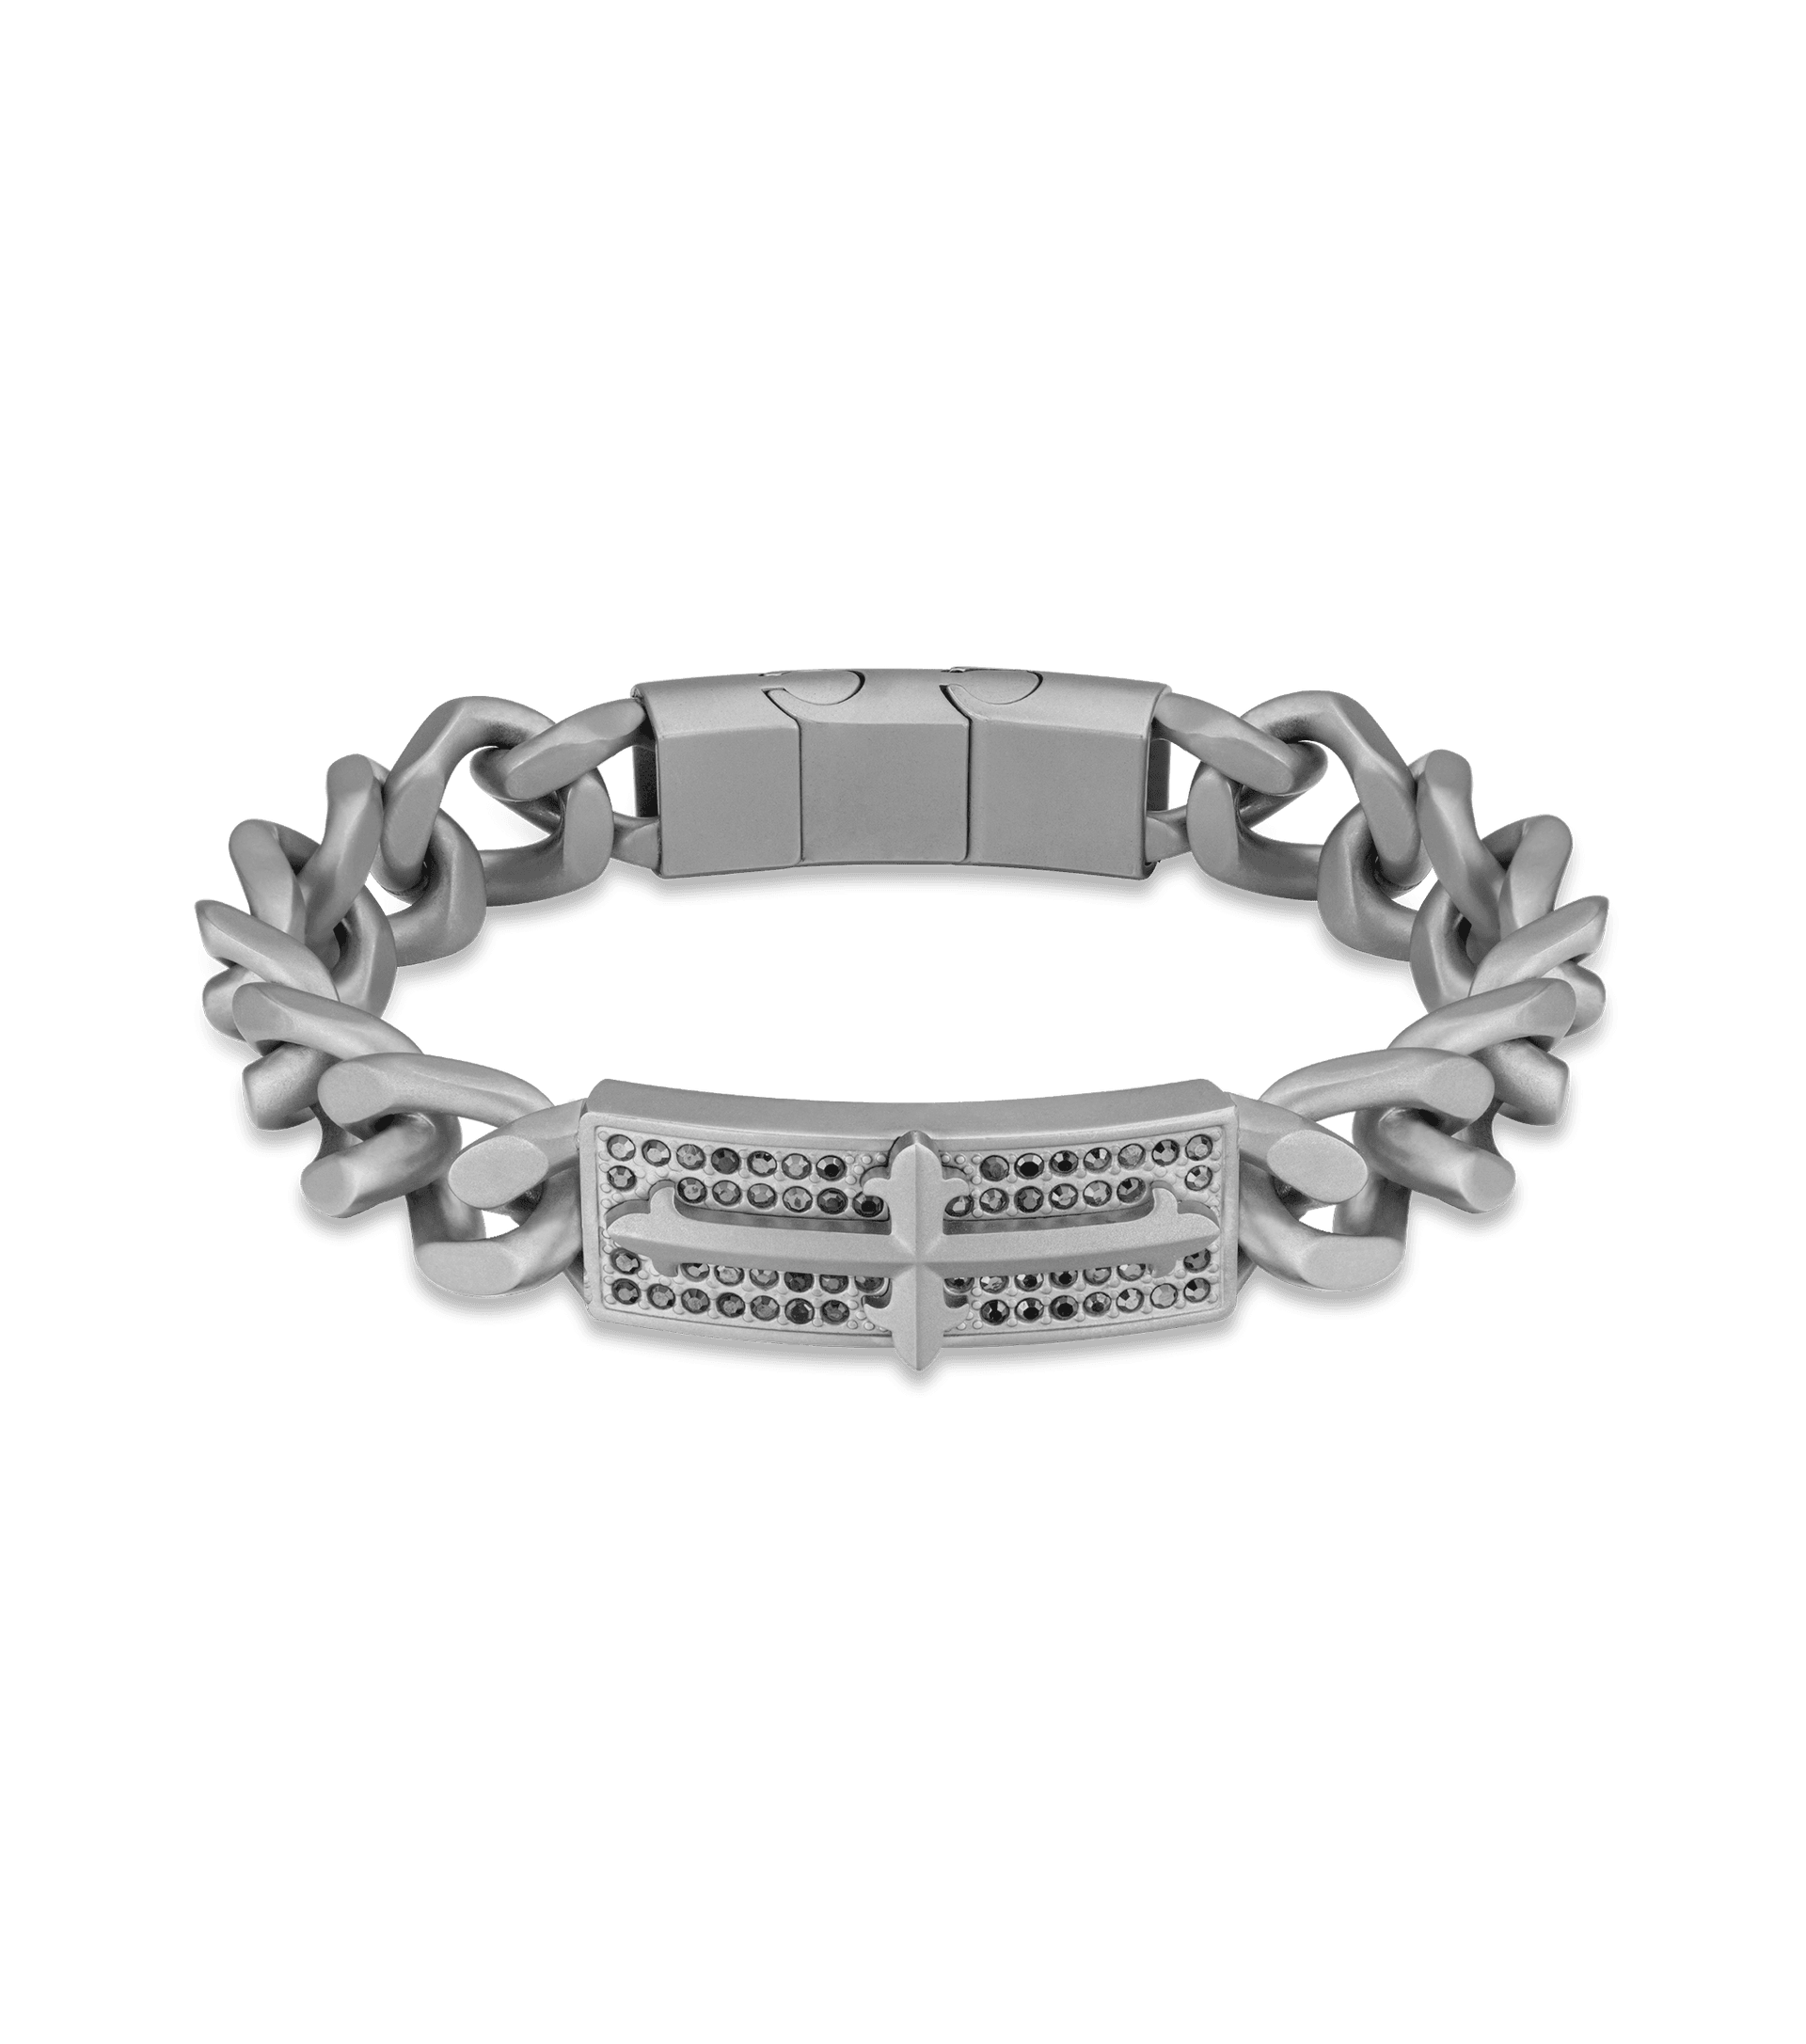 Police jewels - Vigor Armband Von Police Für Männer PEAGB2120402